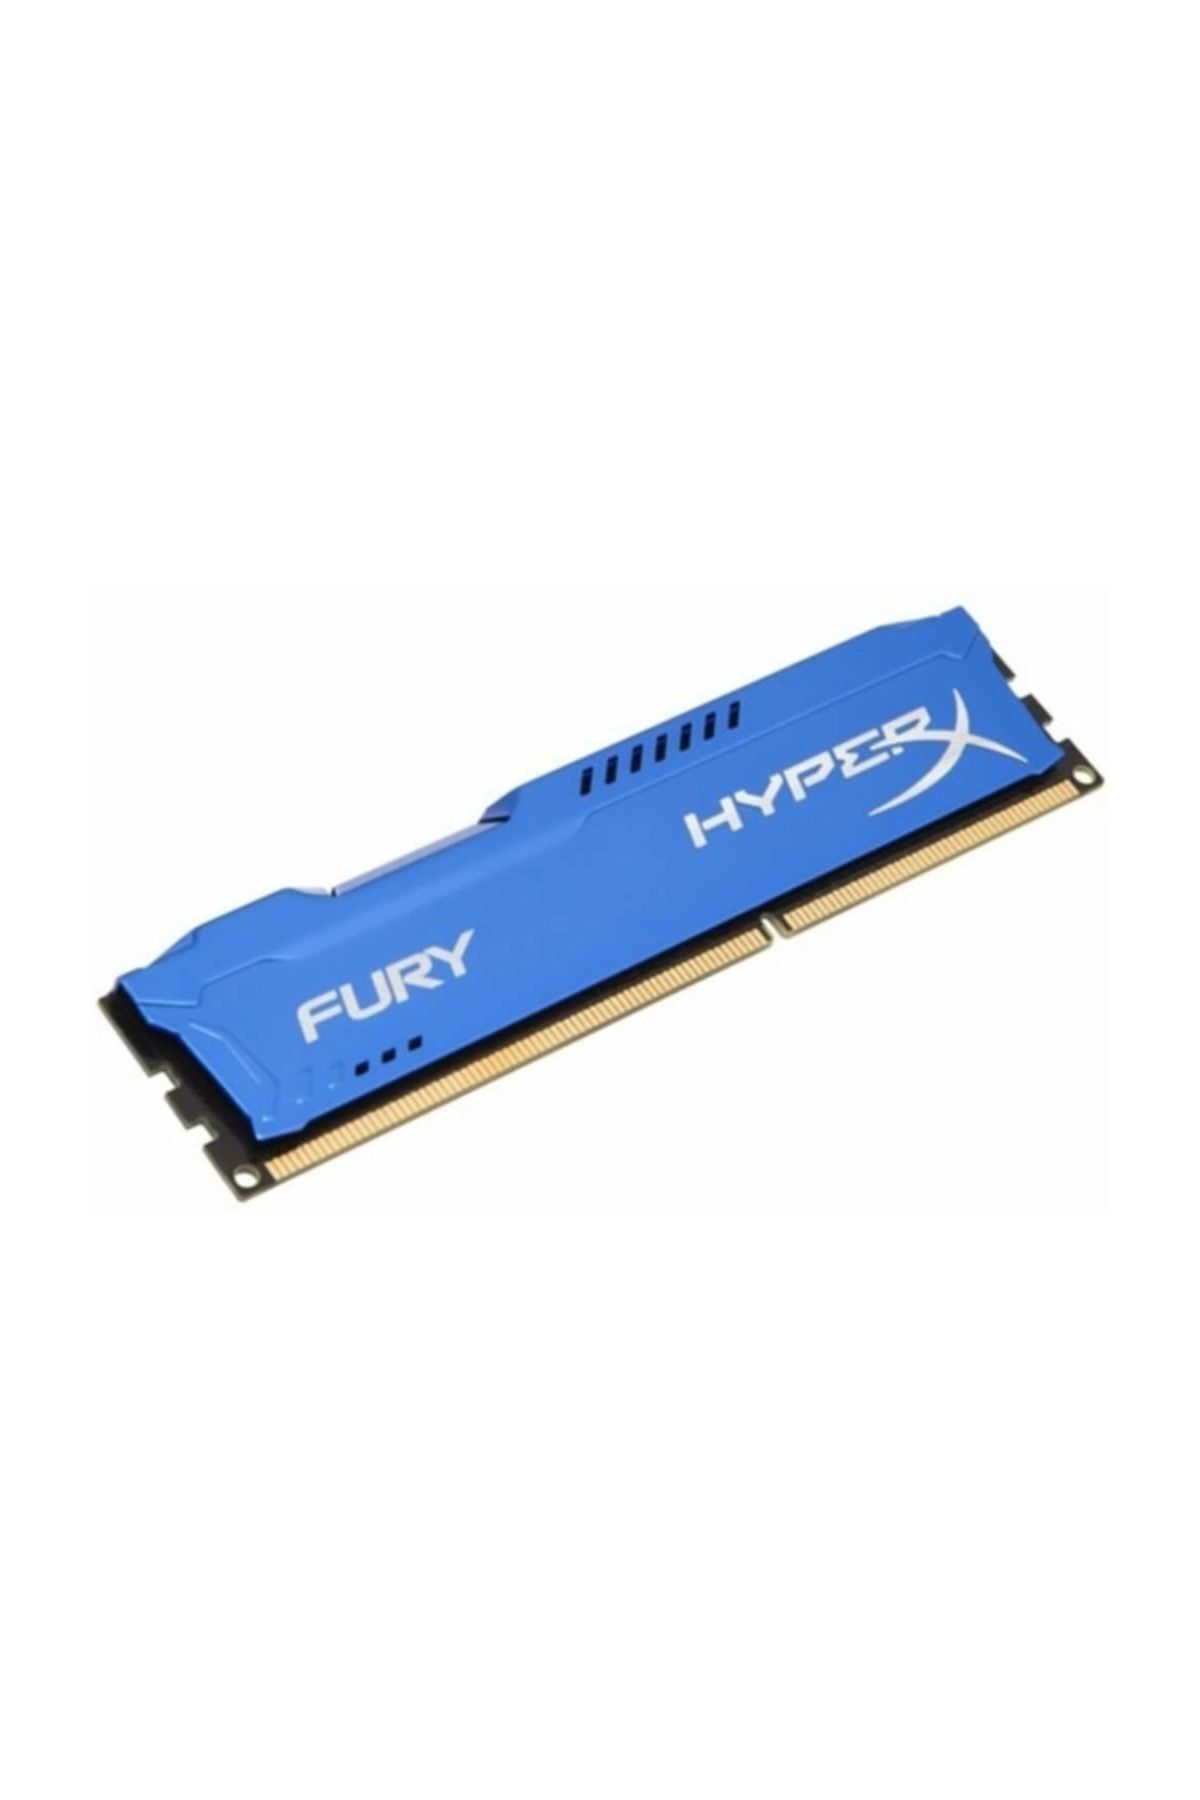 Kingston 8 GB DDR3 1600 MHz KINGSTON HYPERX FURY BLUE CL10 DIMM (HX316C10F/8)